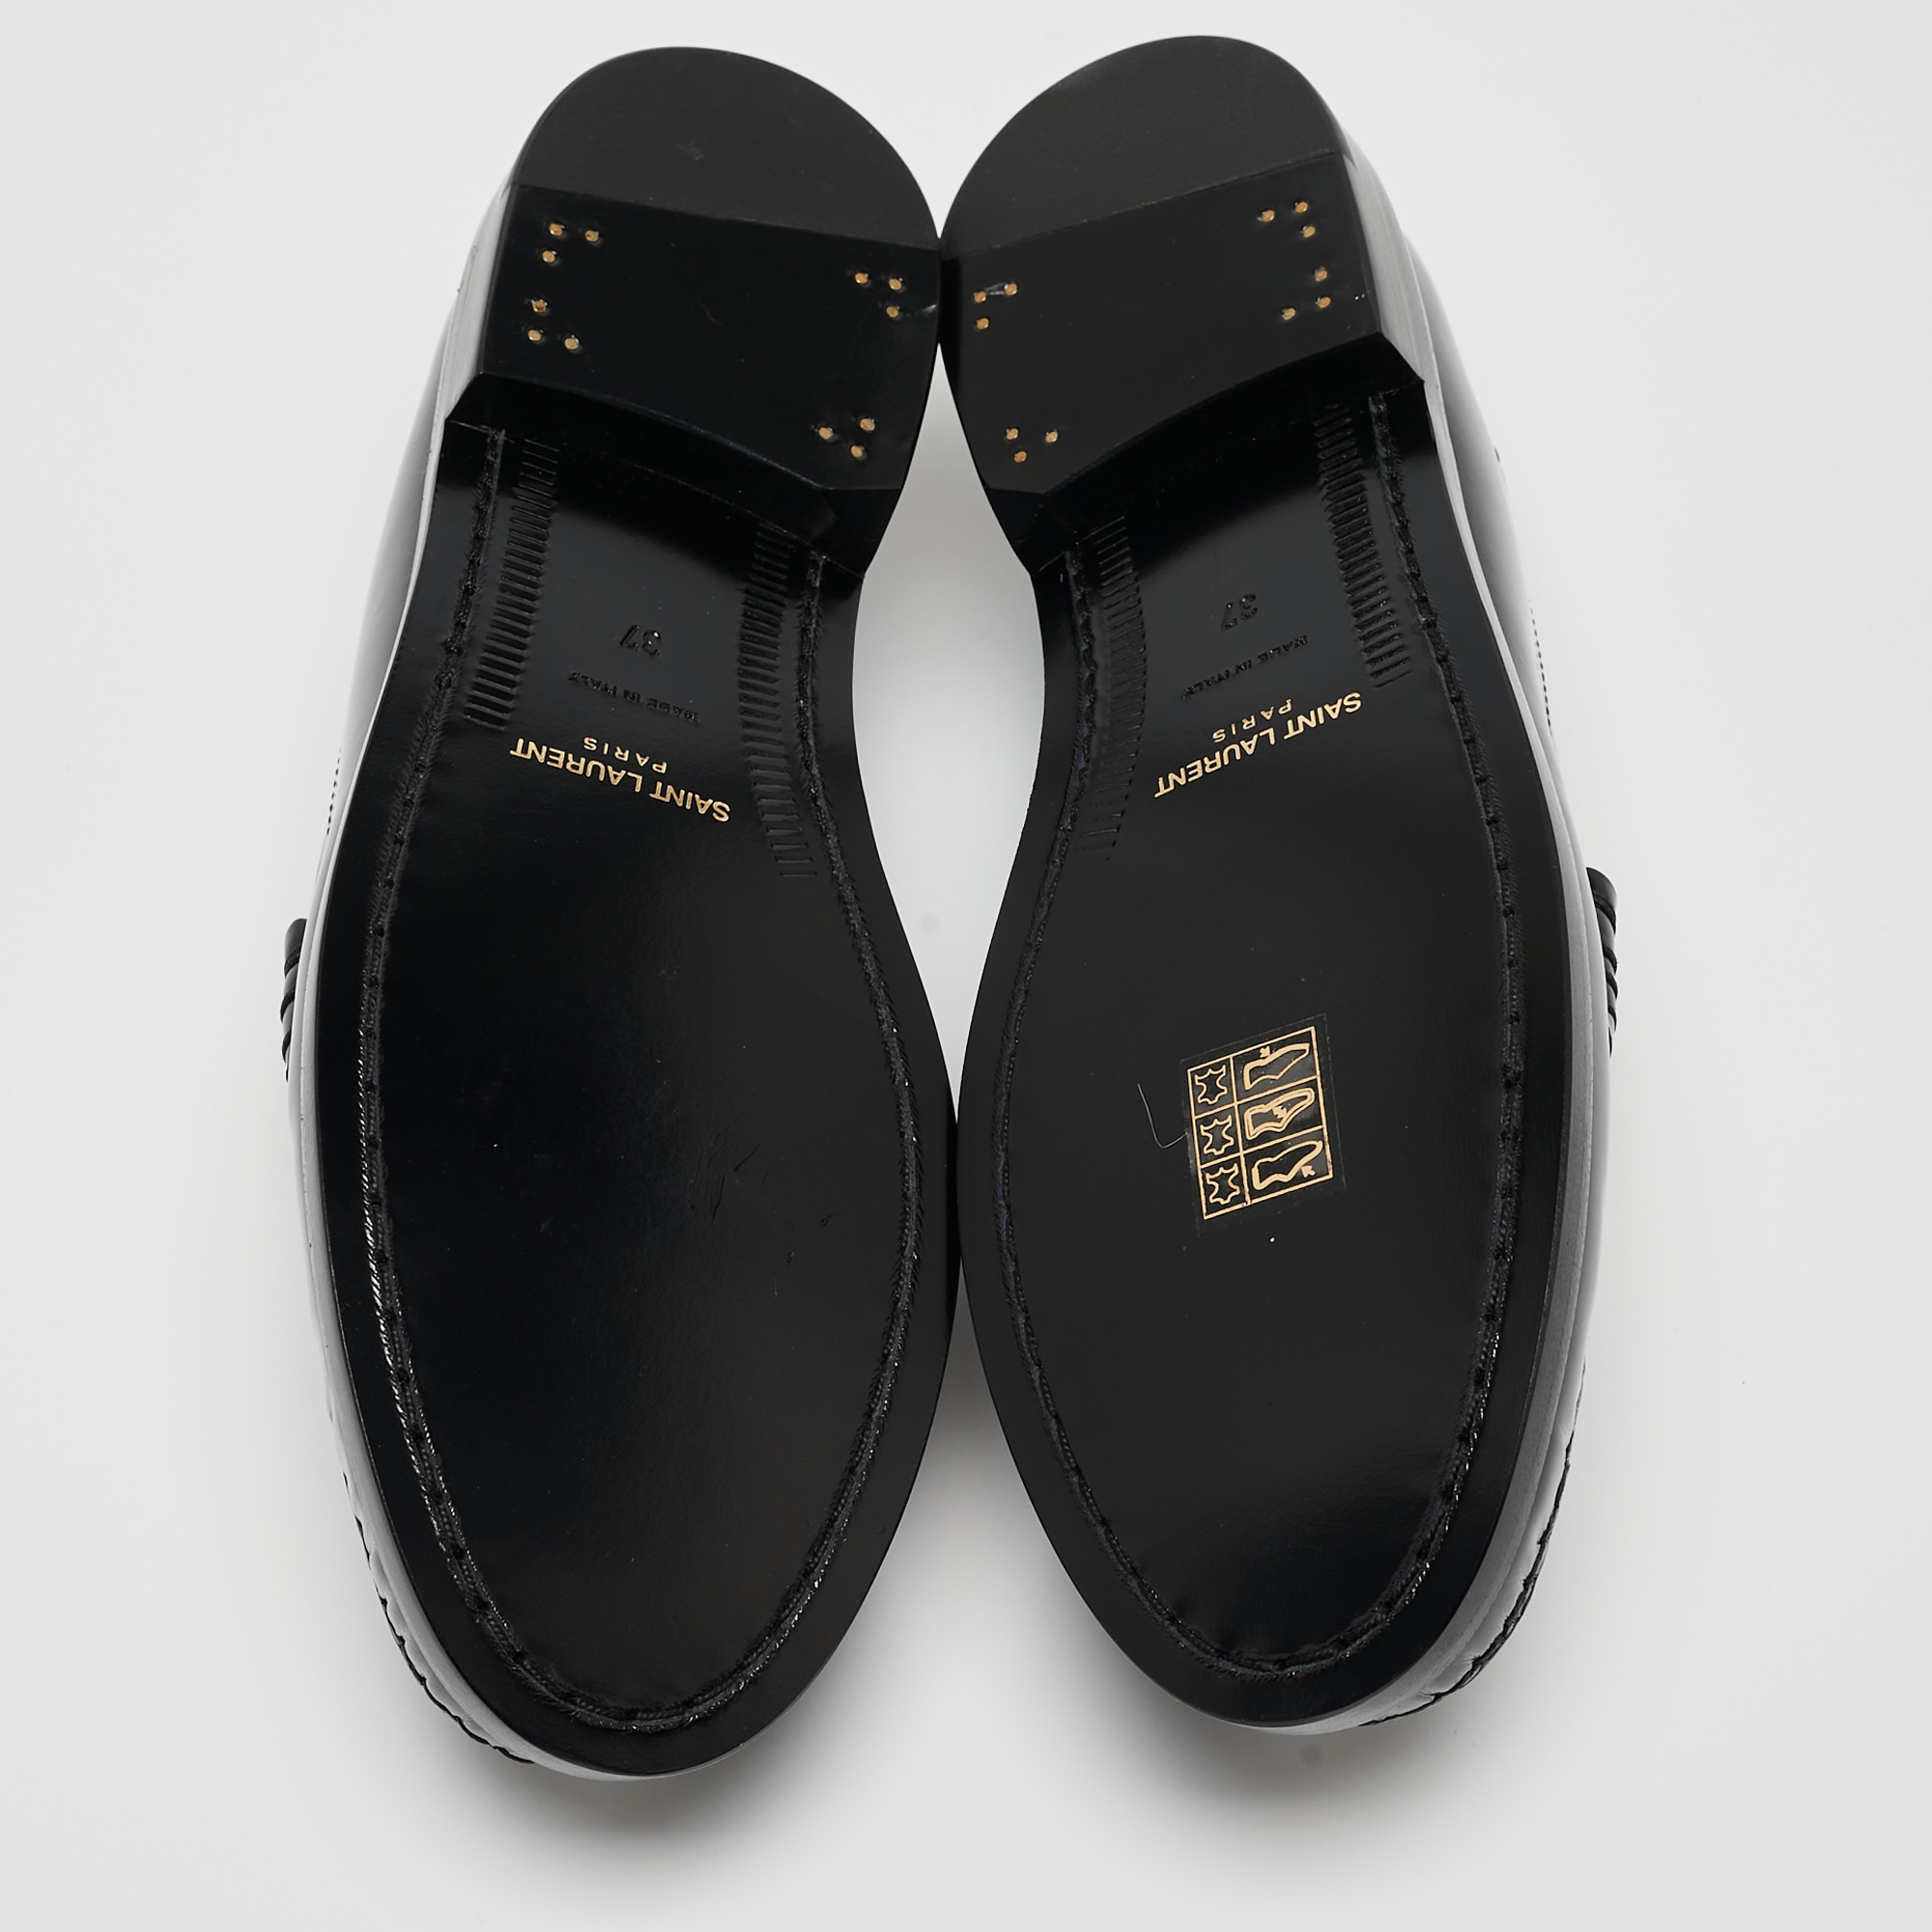 Saint Laurent Black Leather Slip On Loafers Size 37